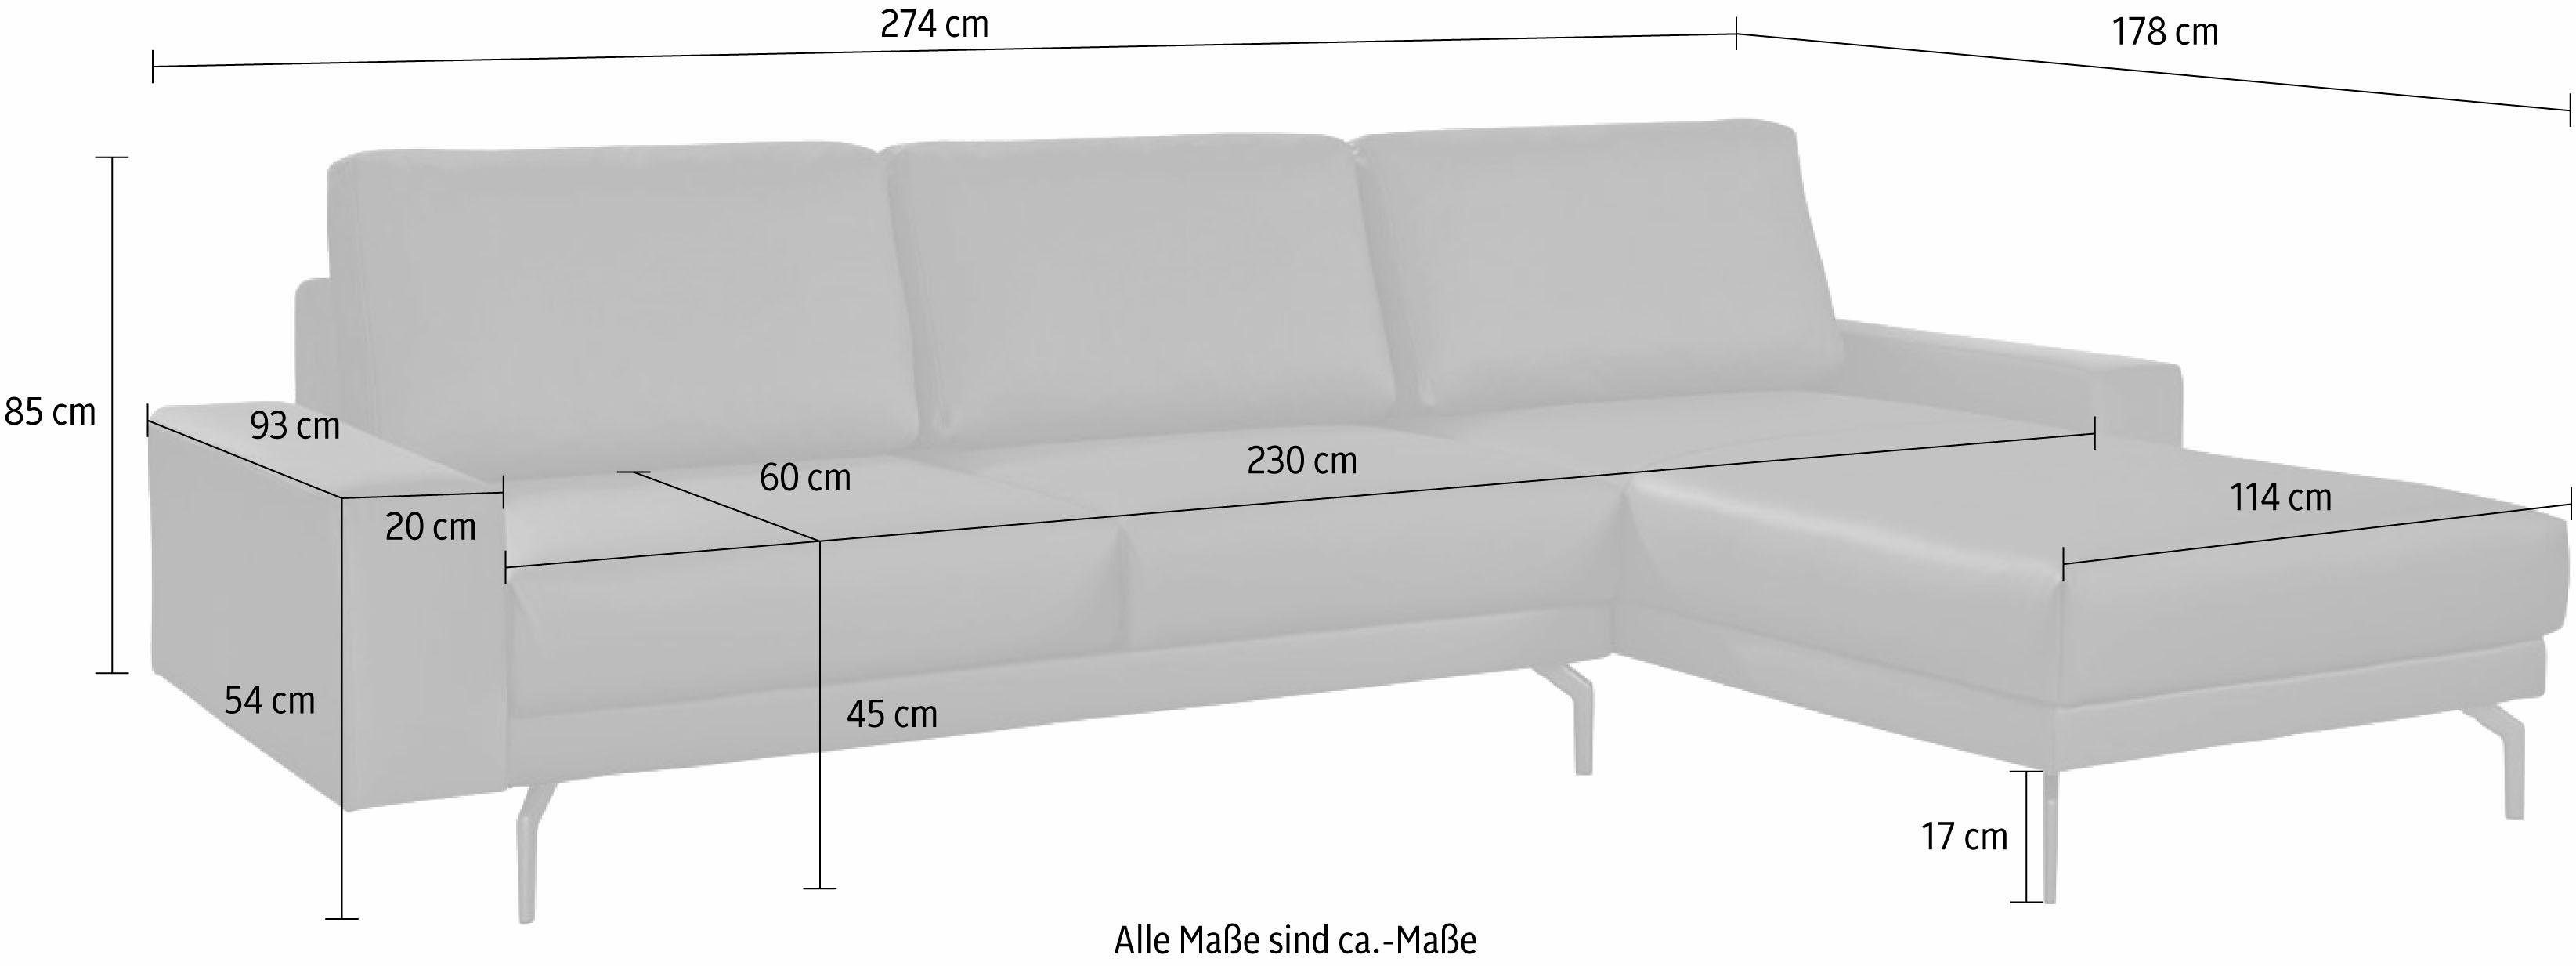 niedrig, cm in 274 sofa breit Alugussfüße Ecksofa umbragrau, und Breite hs.450, hülsta Armlehne